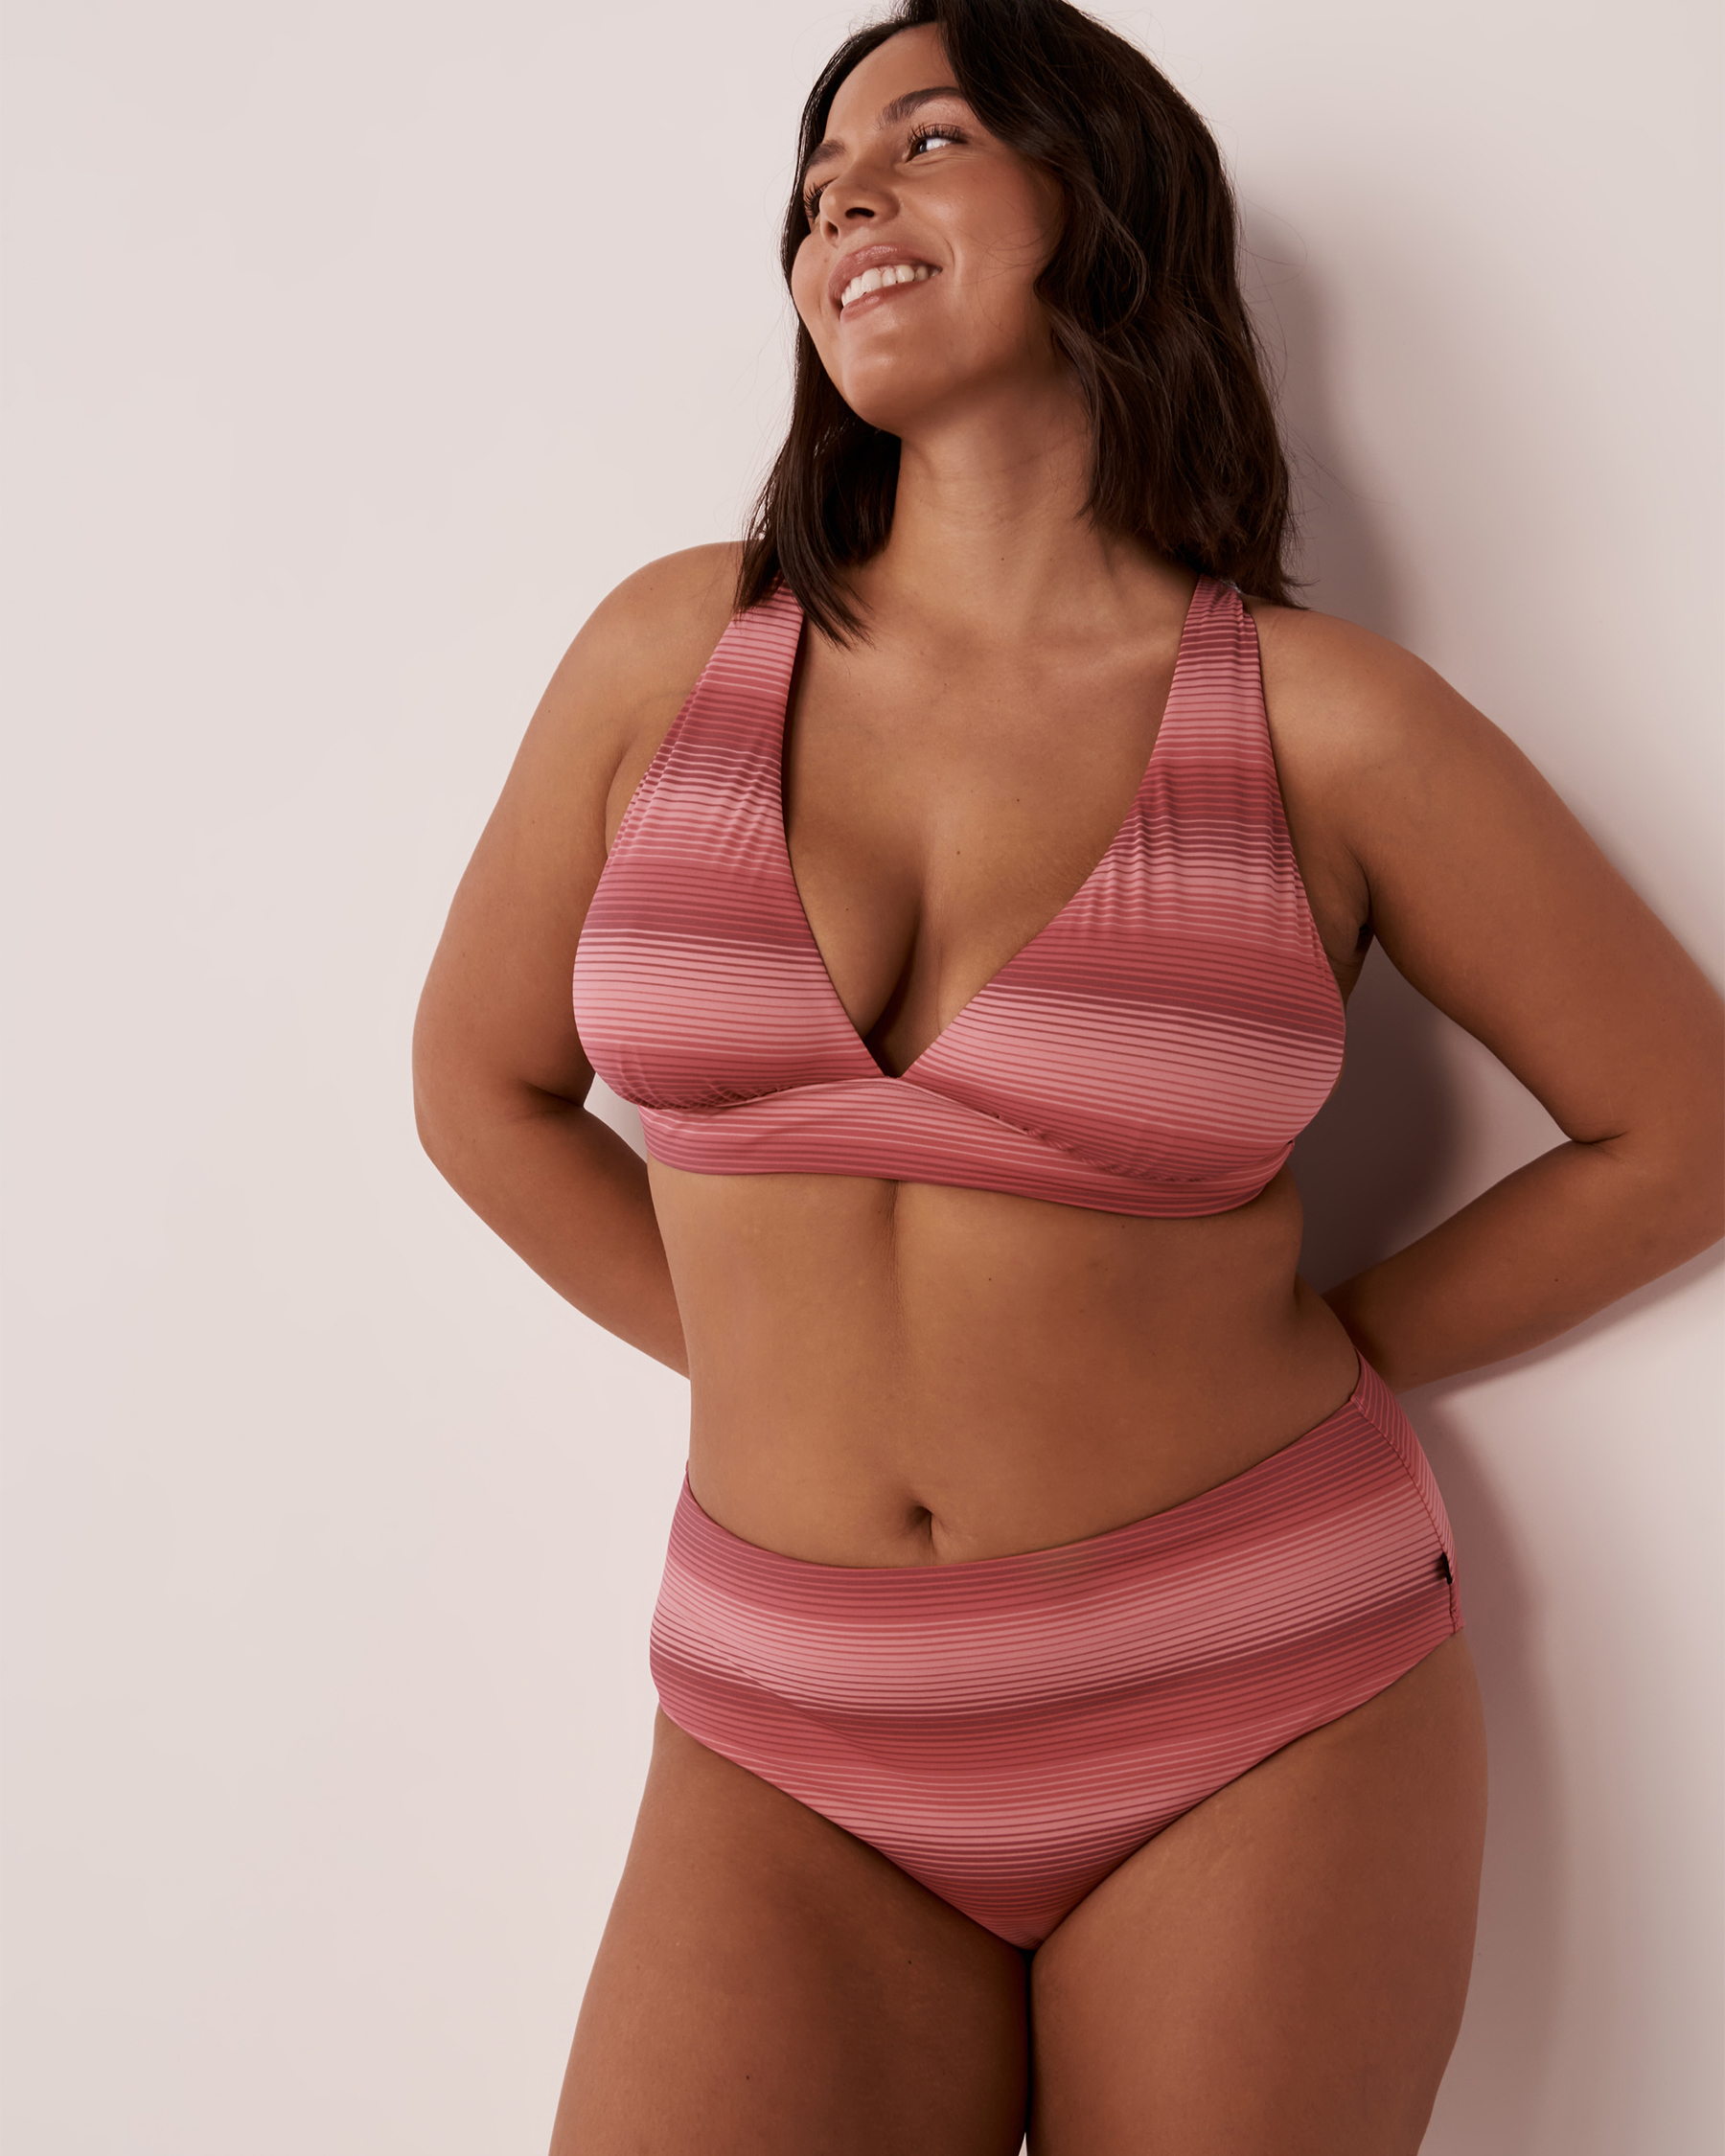 LA VIE EN ROSE AQUA STRIPES Recycled Fibers Mid Waist Bikini Bottom Pink stripes 70300363 - View3